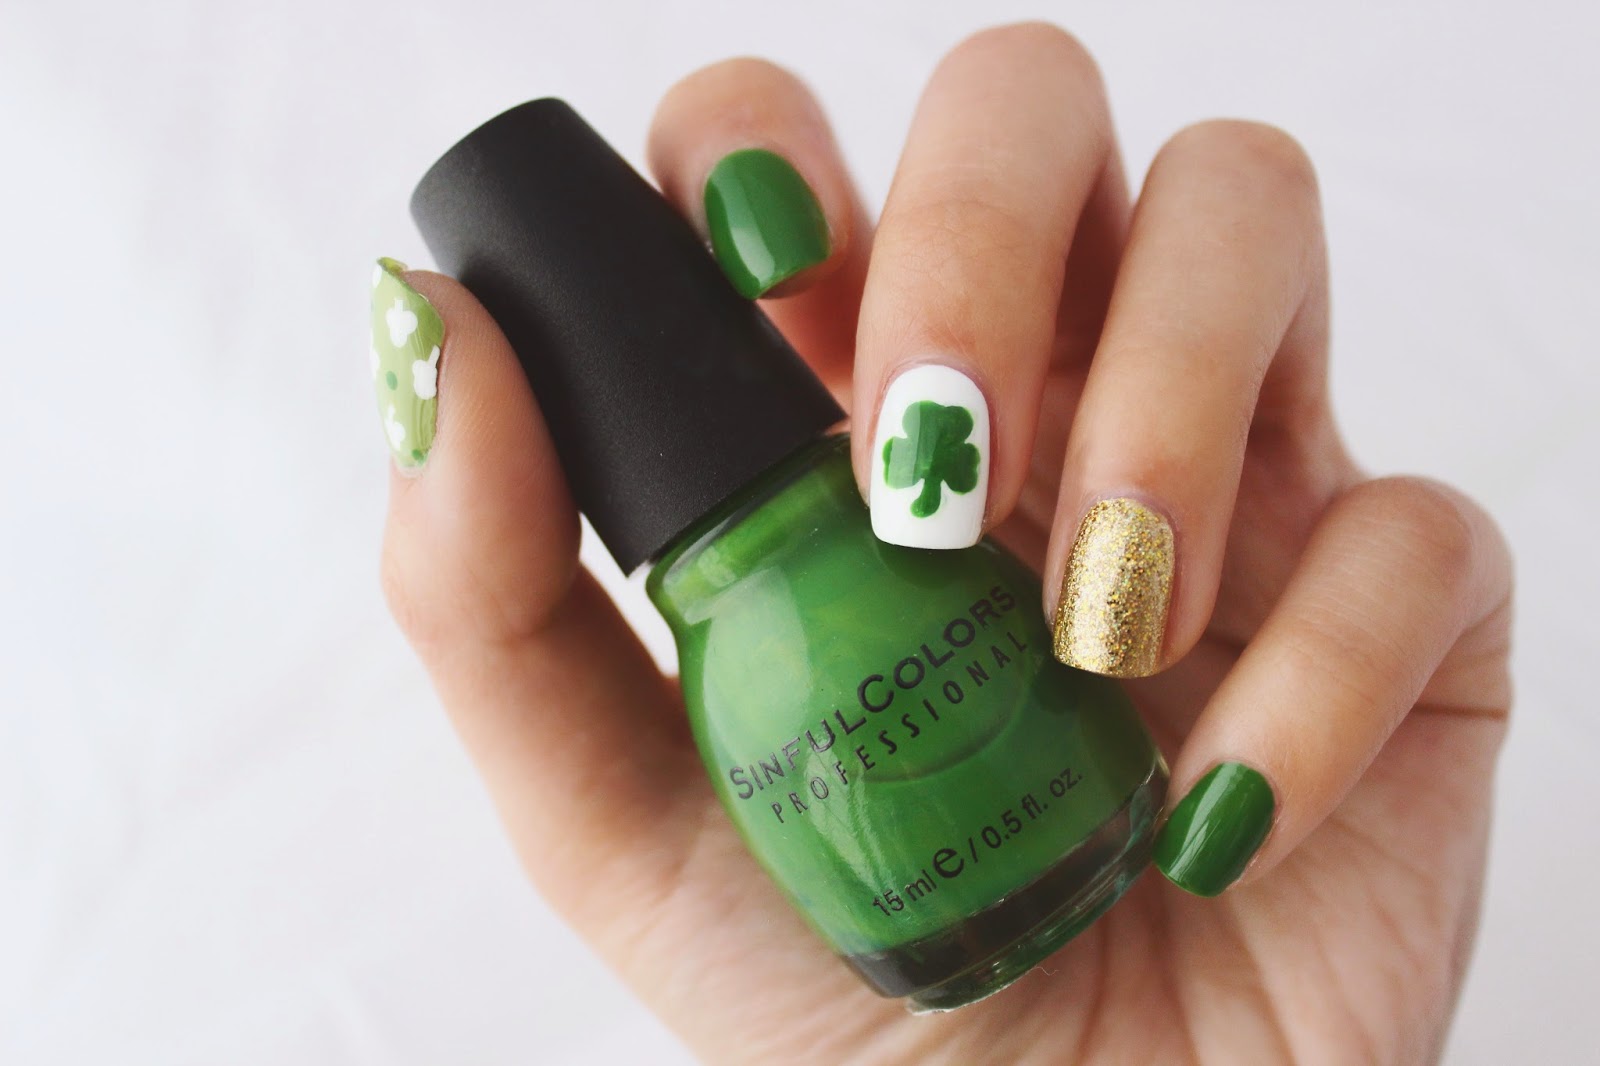 Pretty nails for St. Patricks day.